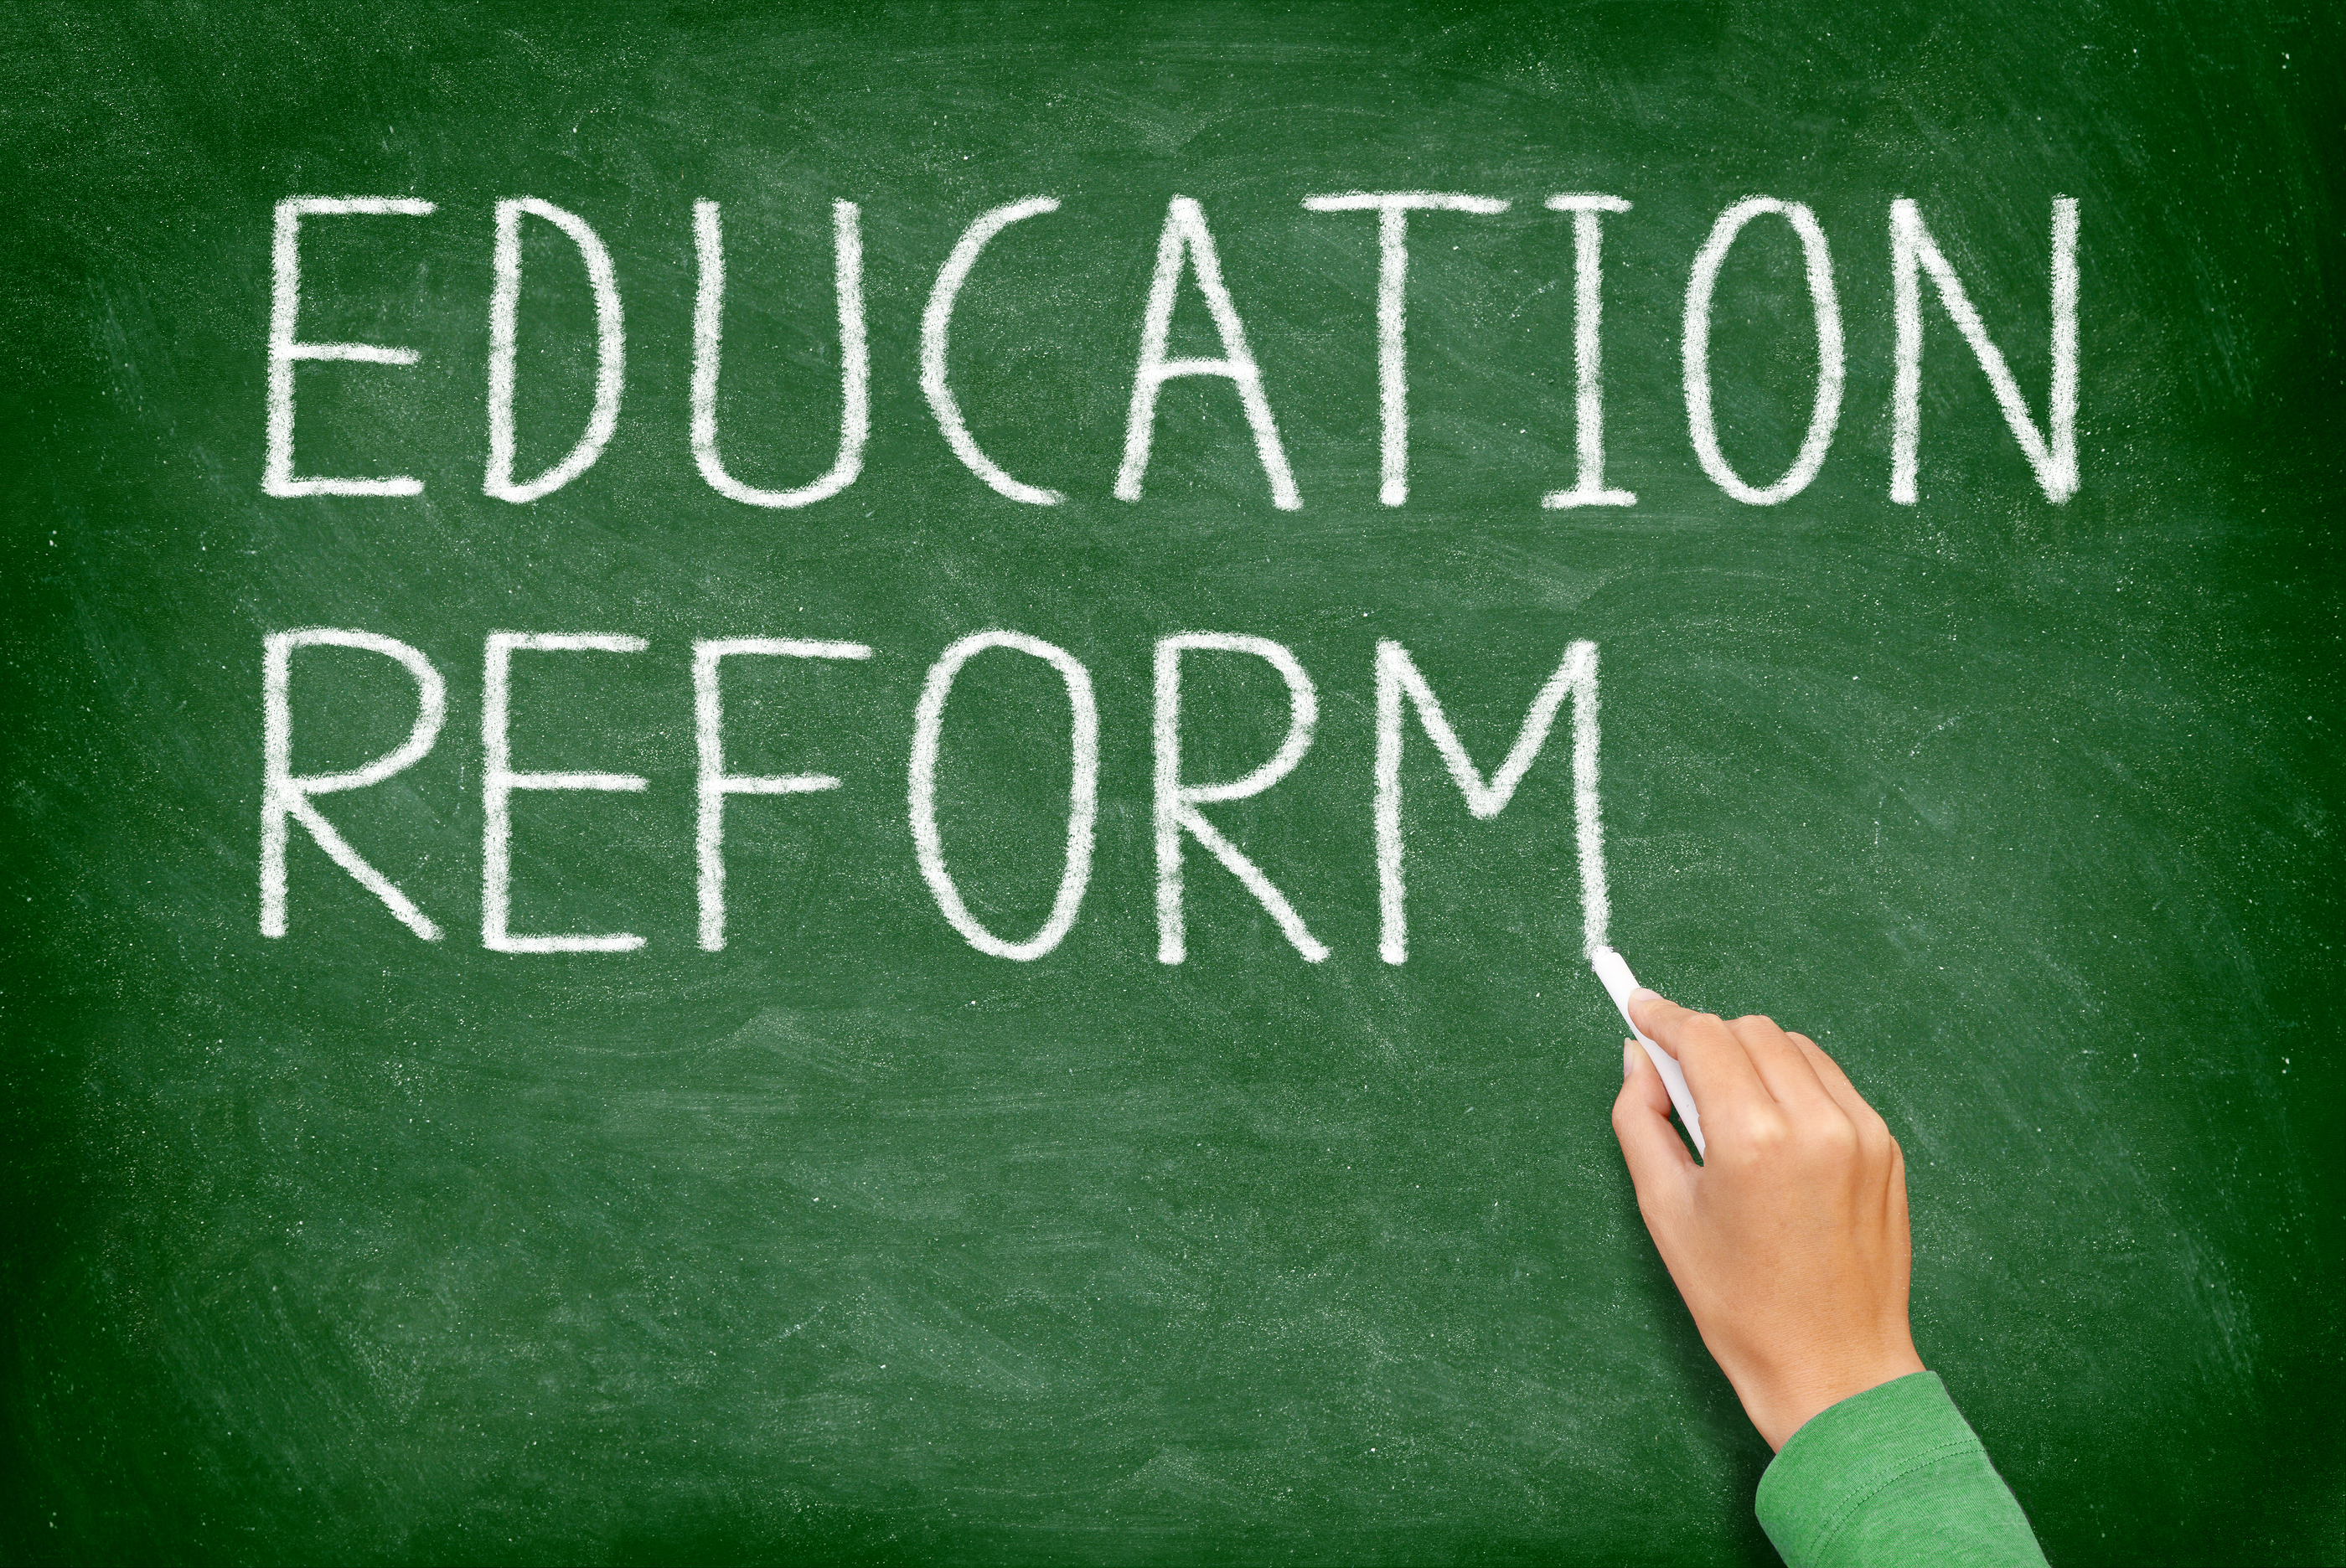 bigstock-education-reform-school-refo-48690005.jpg